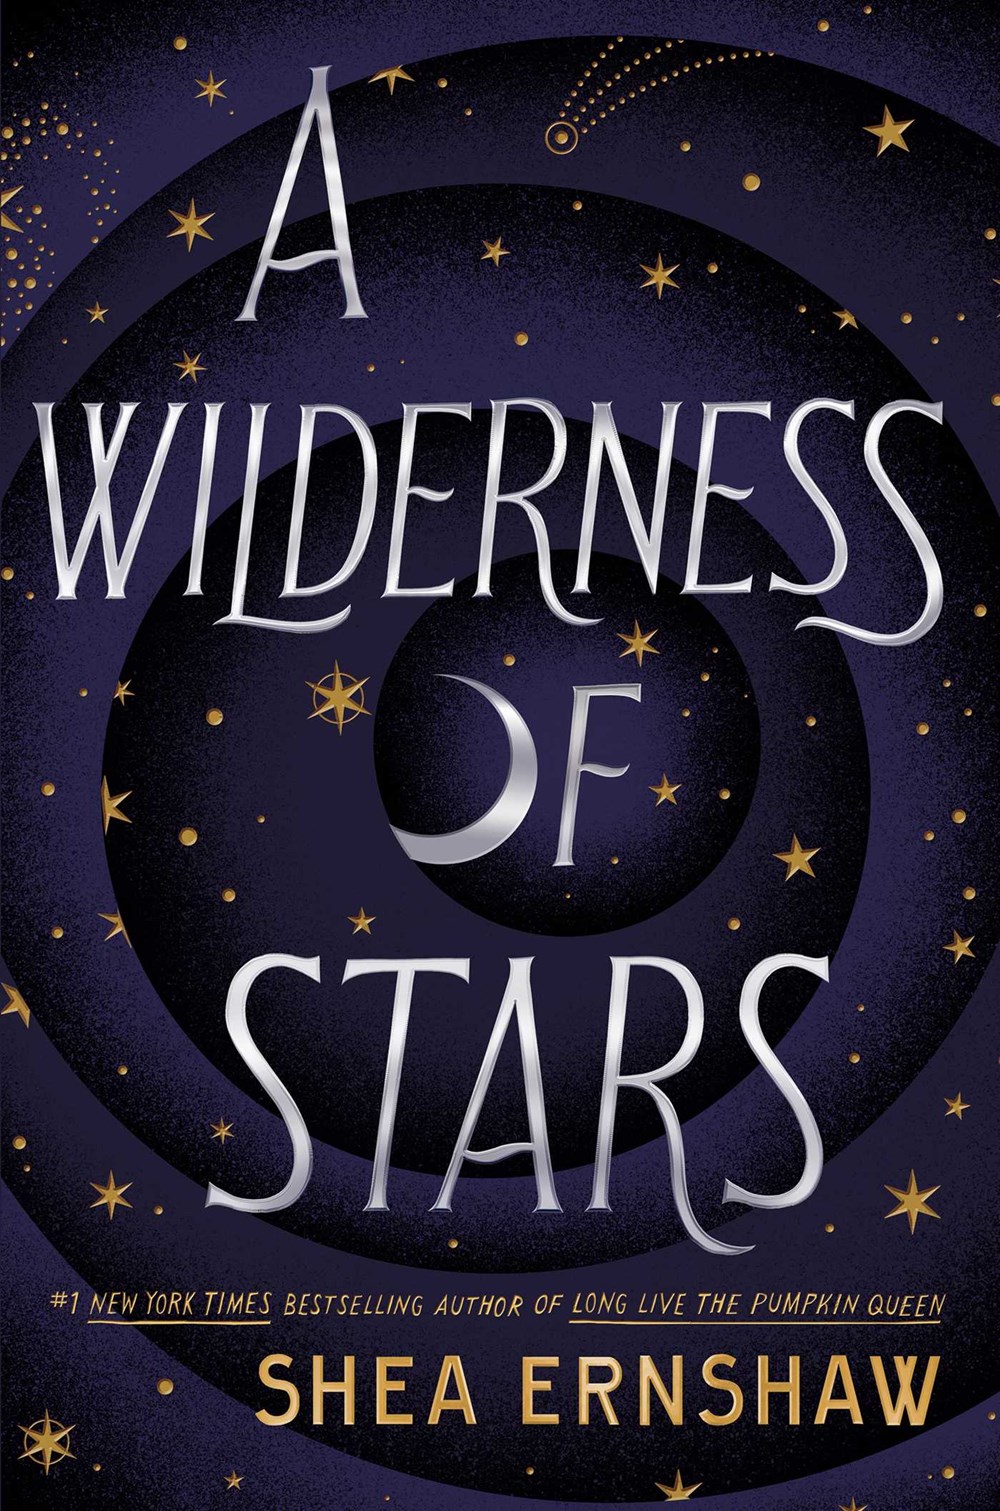 A Wilderness of Stars by Shea Ernshaw